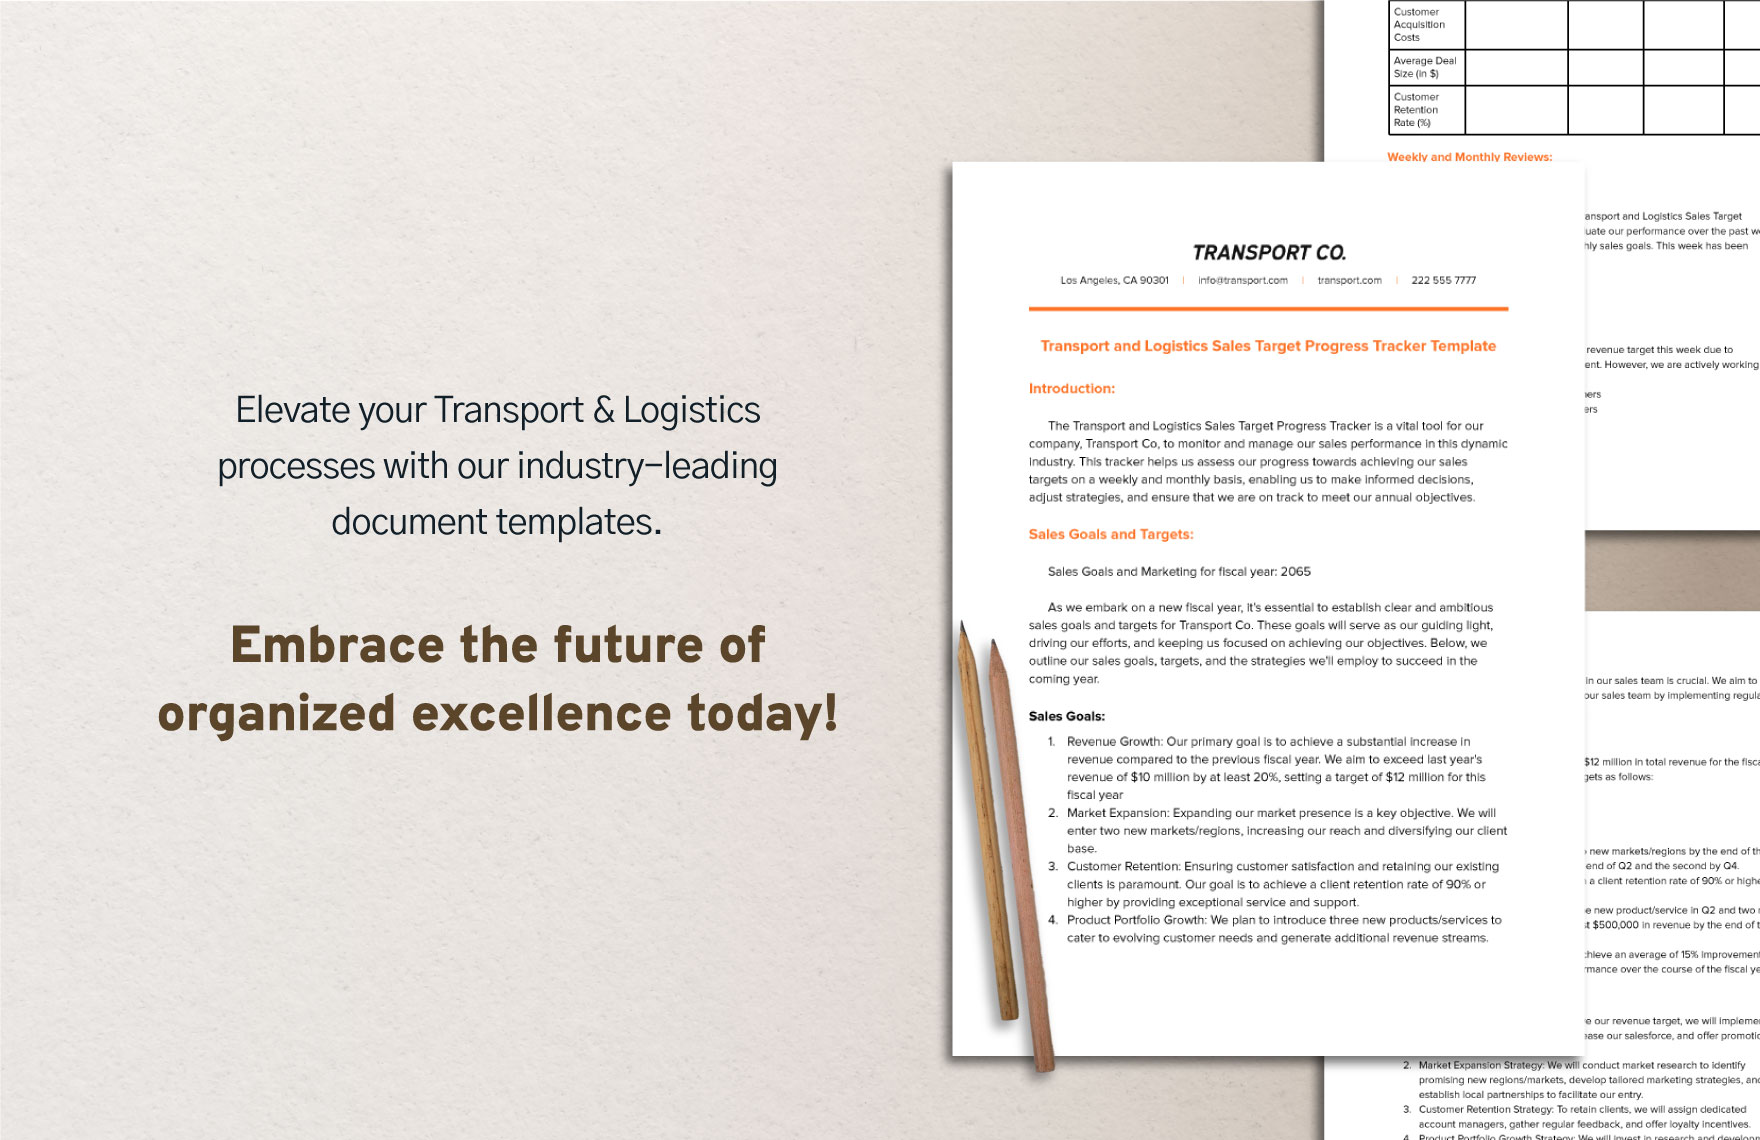 Transport and Logistics Sales Target Progress Tracker Template